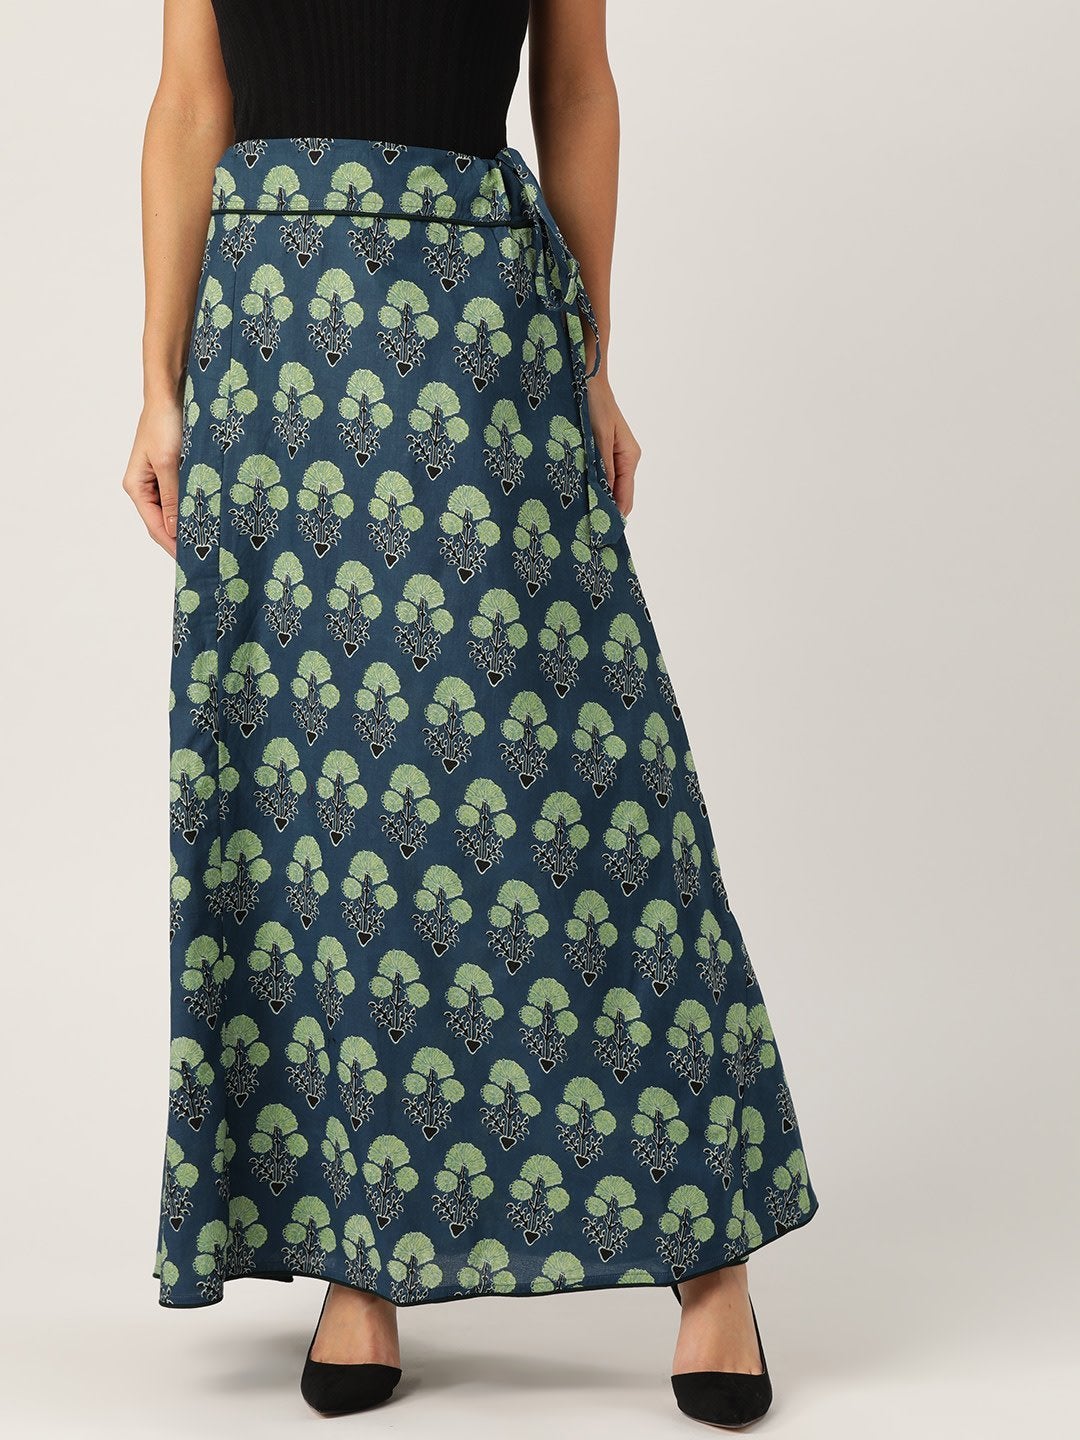 Women's Blue Floral Printed Skirt - InWeave